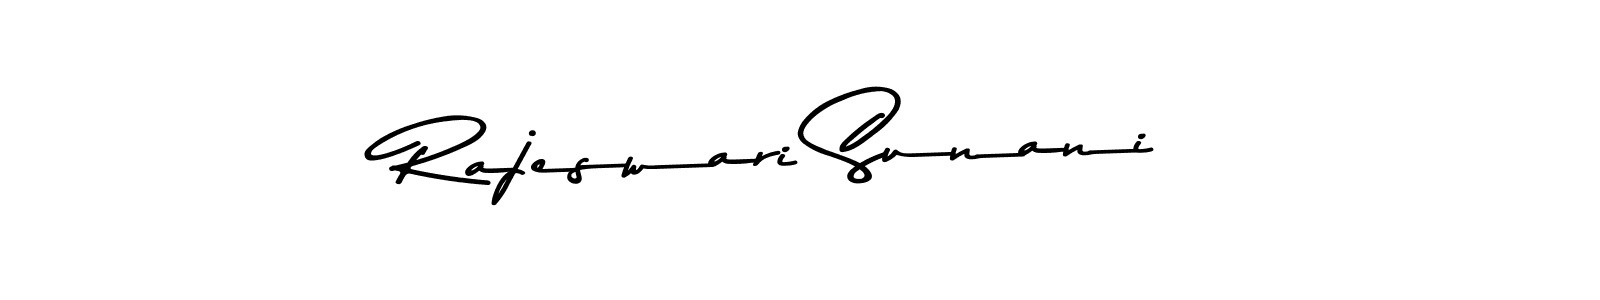 How to Draw Rajeswari Sunani signature style? Asem Kandis PERSONAL USE is a latest design signature styles for name Rajeswari Sunani. Rajeswari Sunani signature style 9 images and pictures png